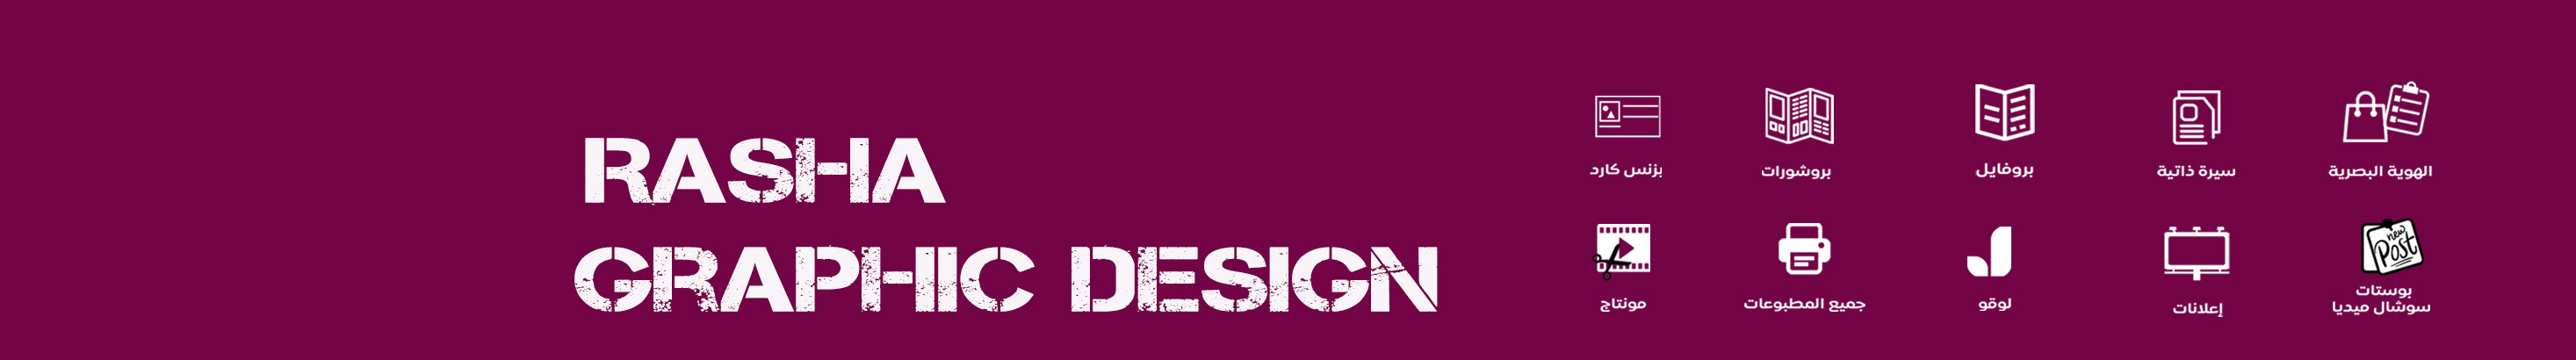 Rasha | Graphic designer's profile banner